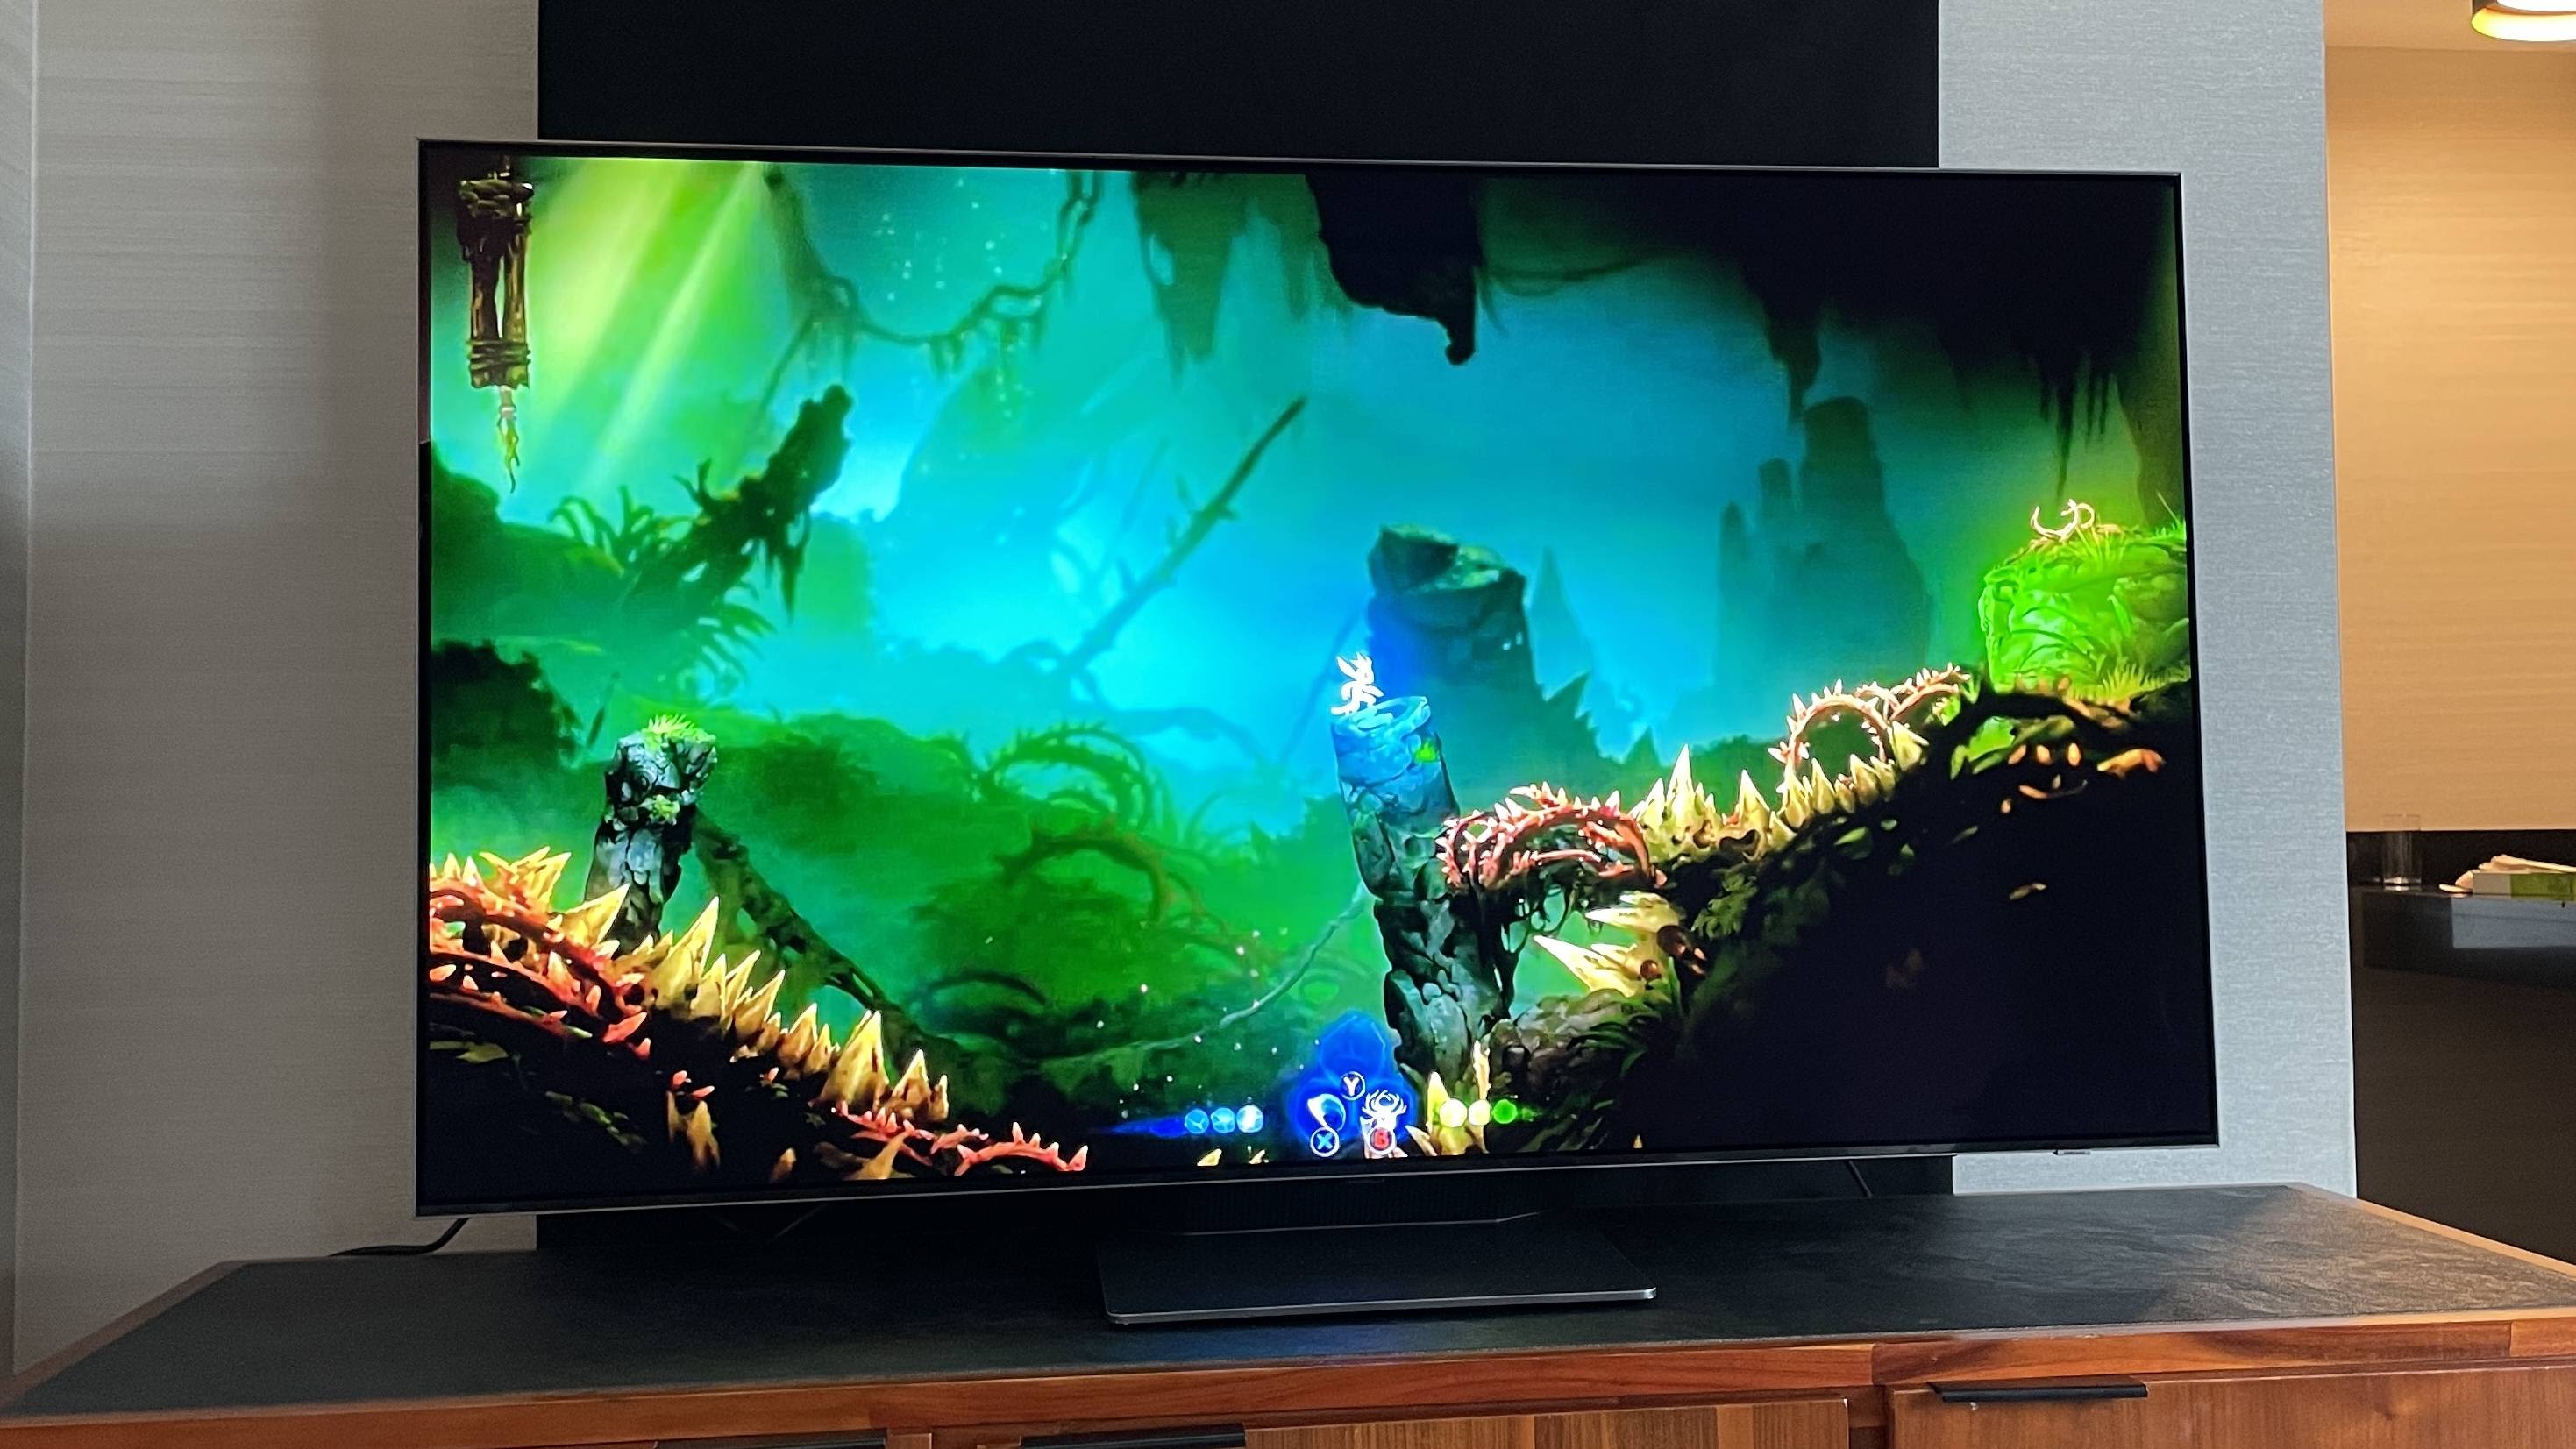 Xbox Game Pass APP On Samsung TVs! 